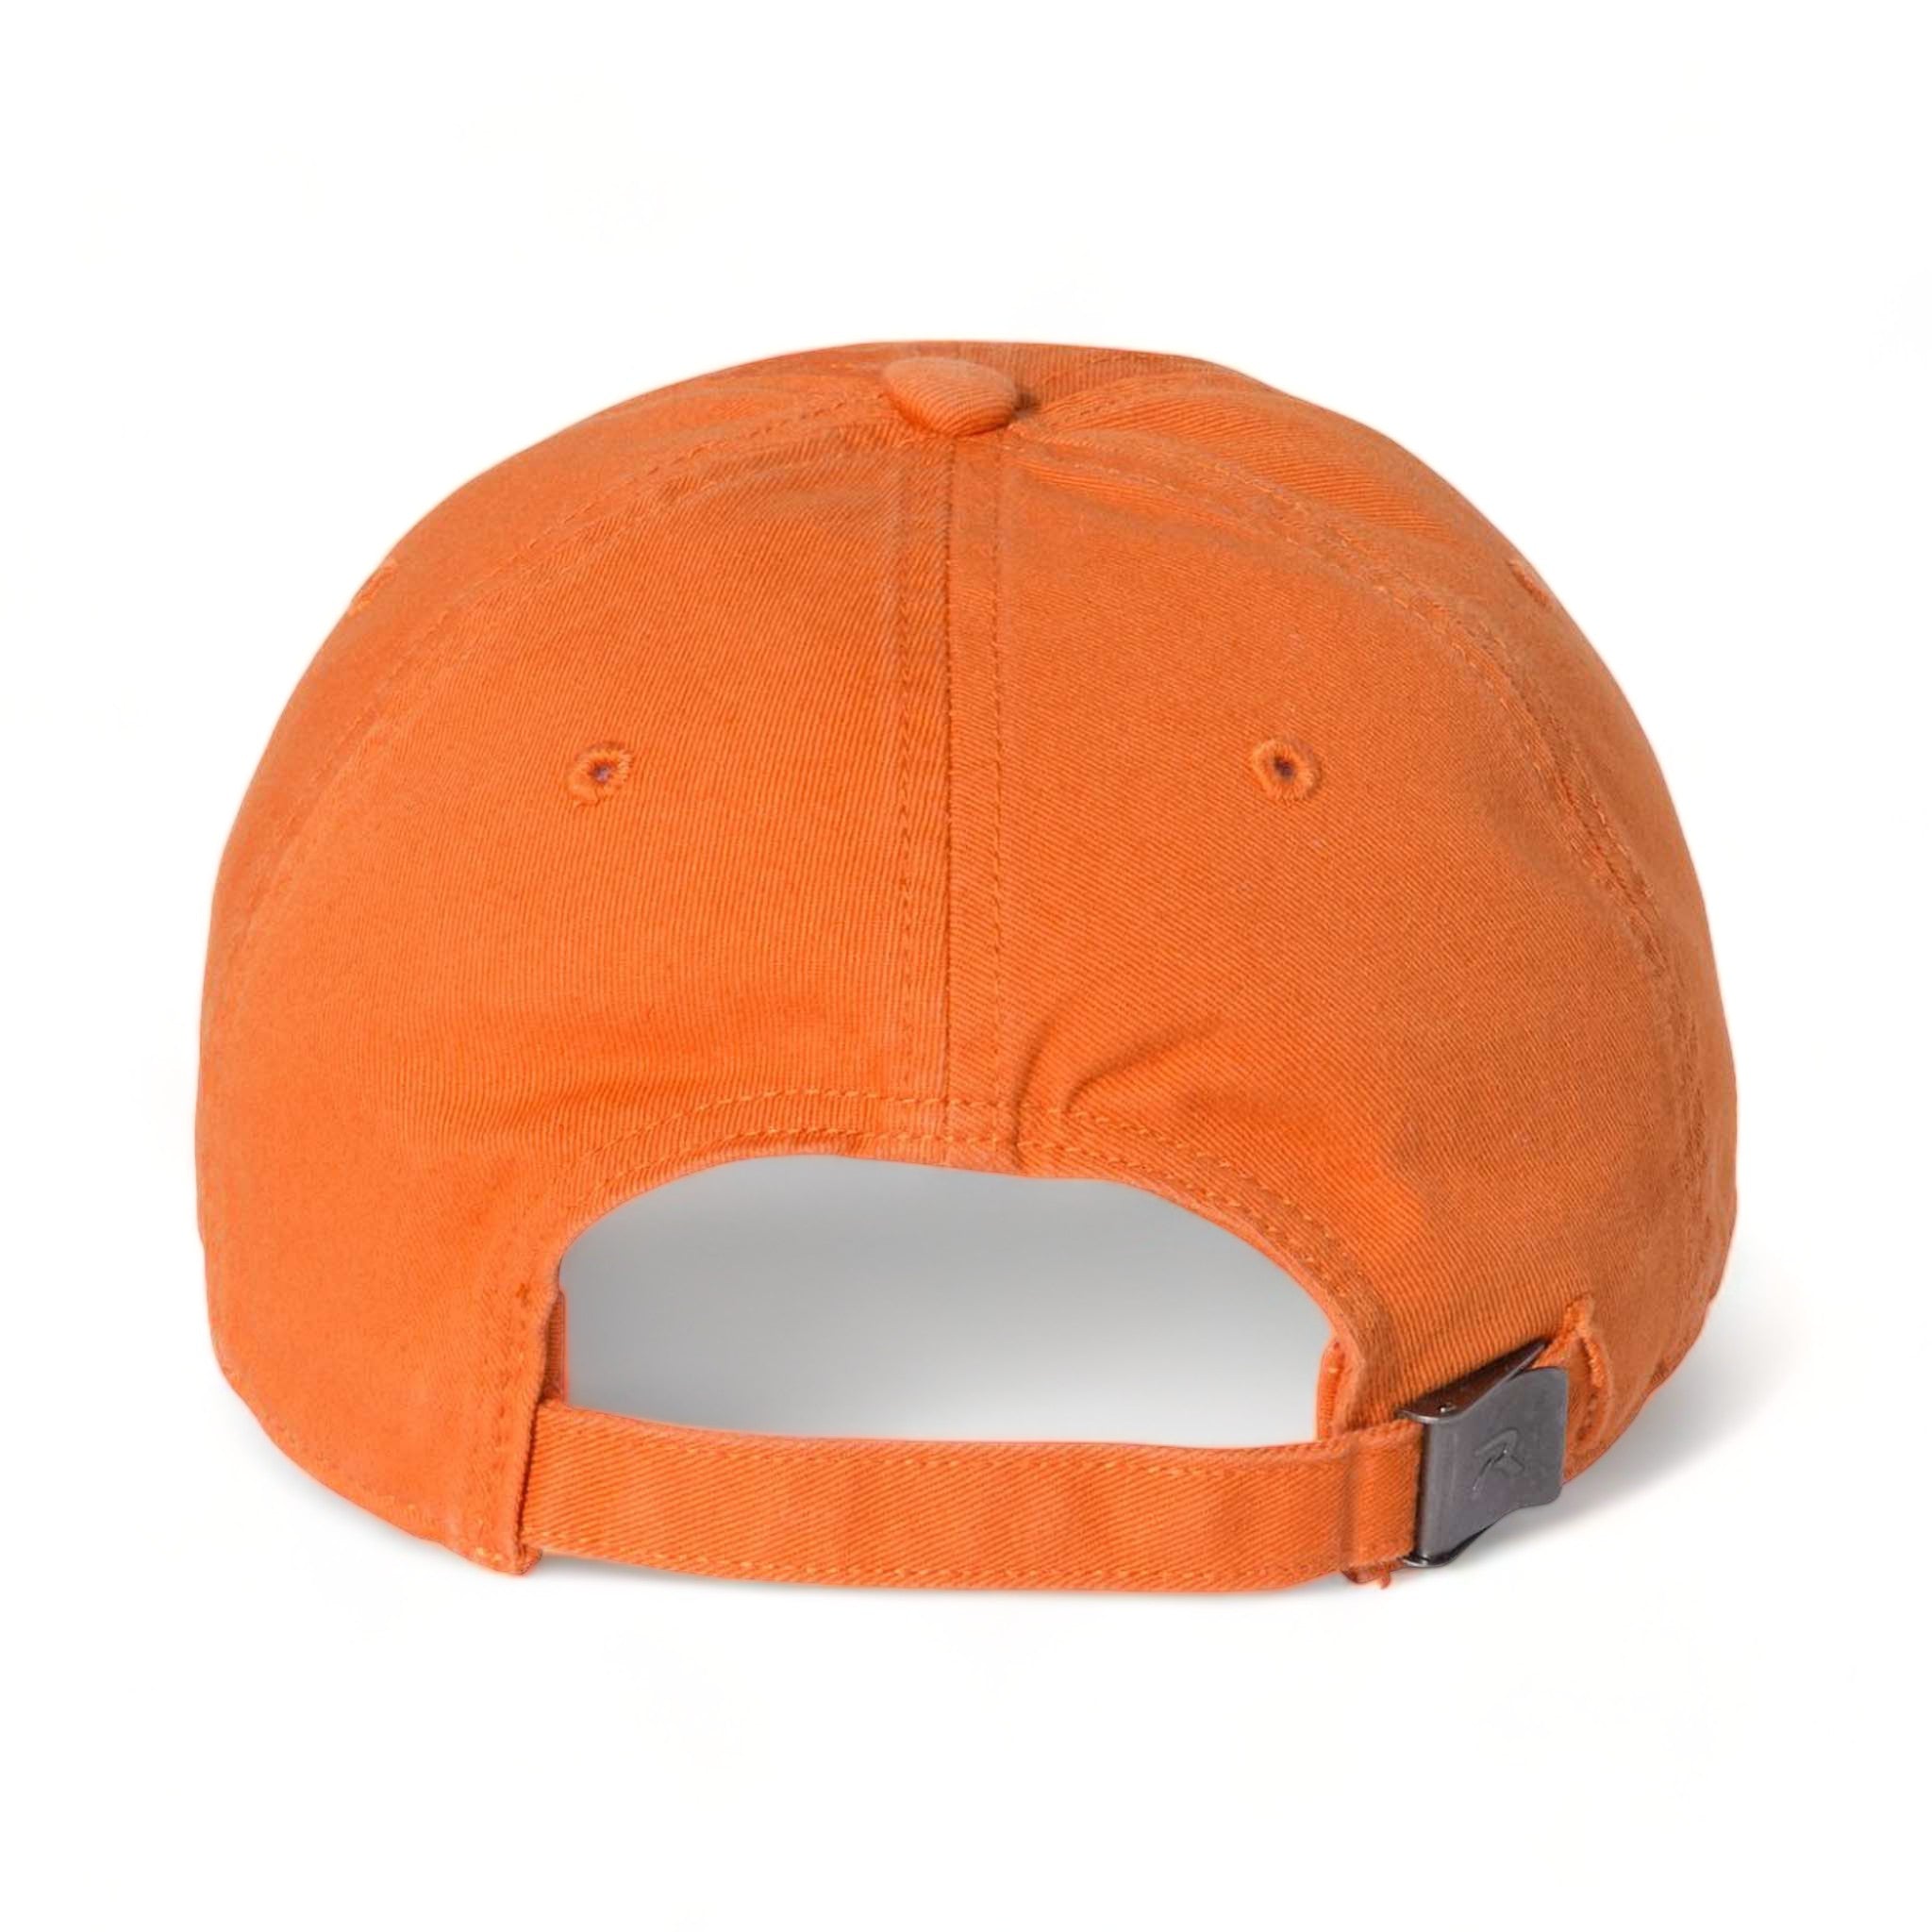 Back view of Richardson 320 custom hat in orange